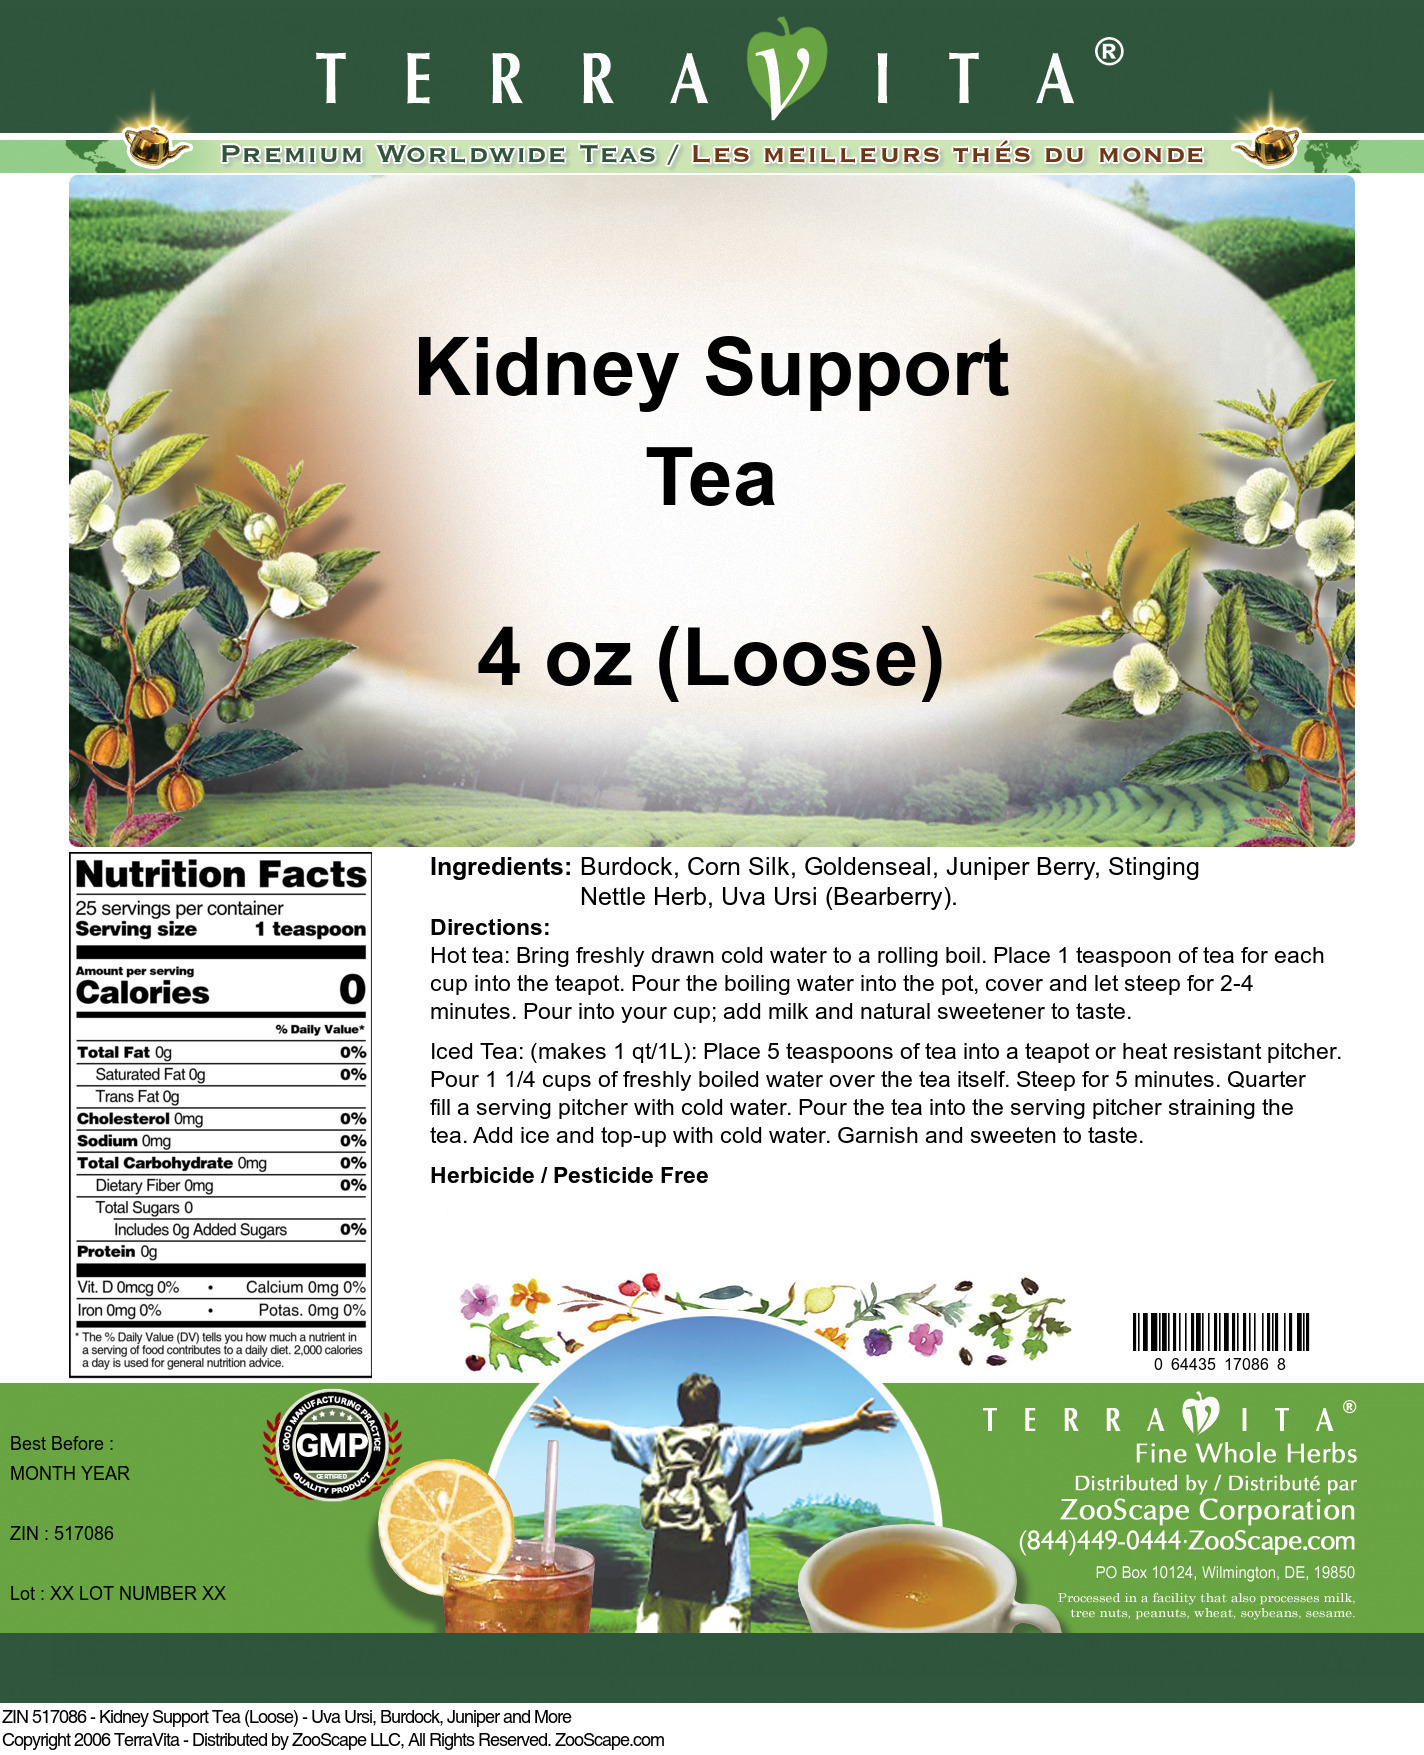 Kidney Support Tea (Loose) - Uva Ursi, Burdock, Juniper and More - Label